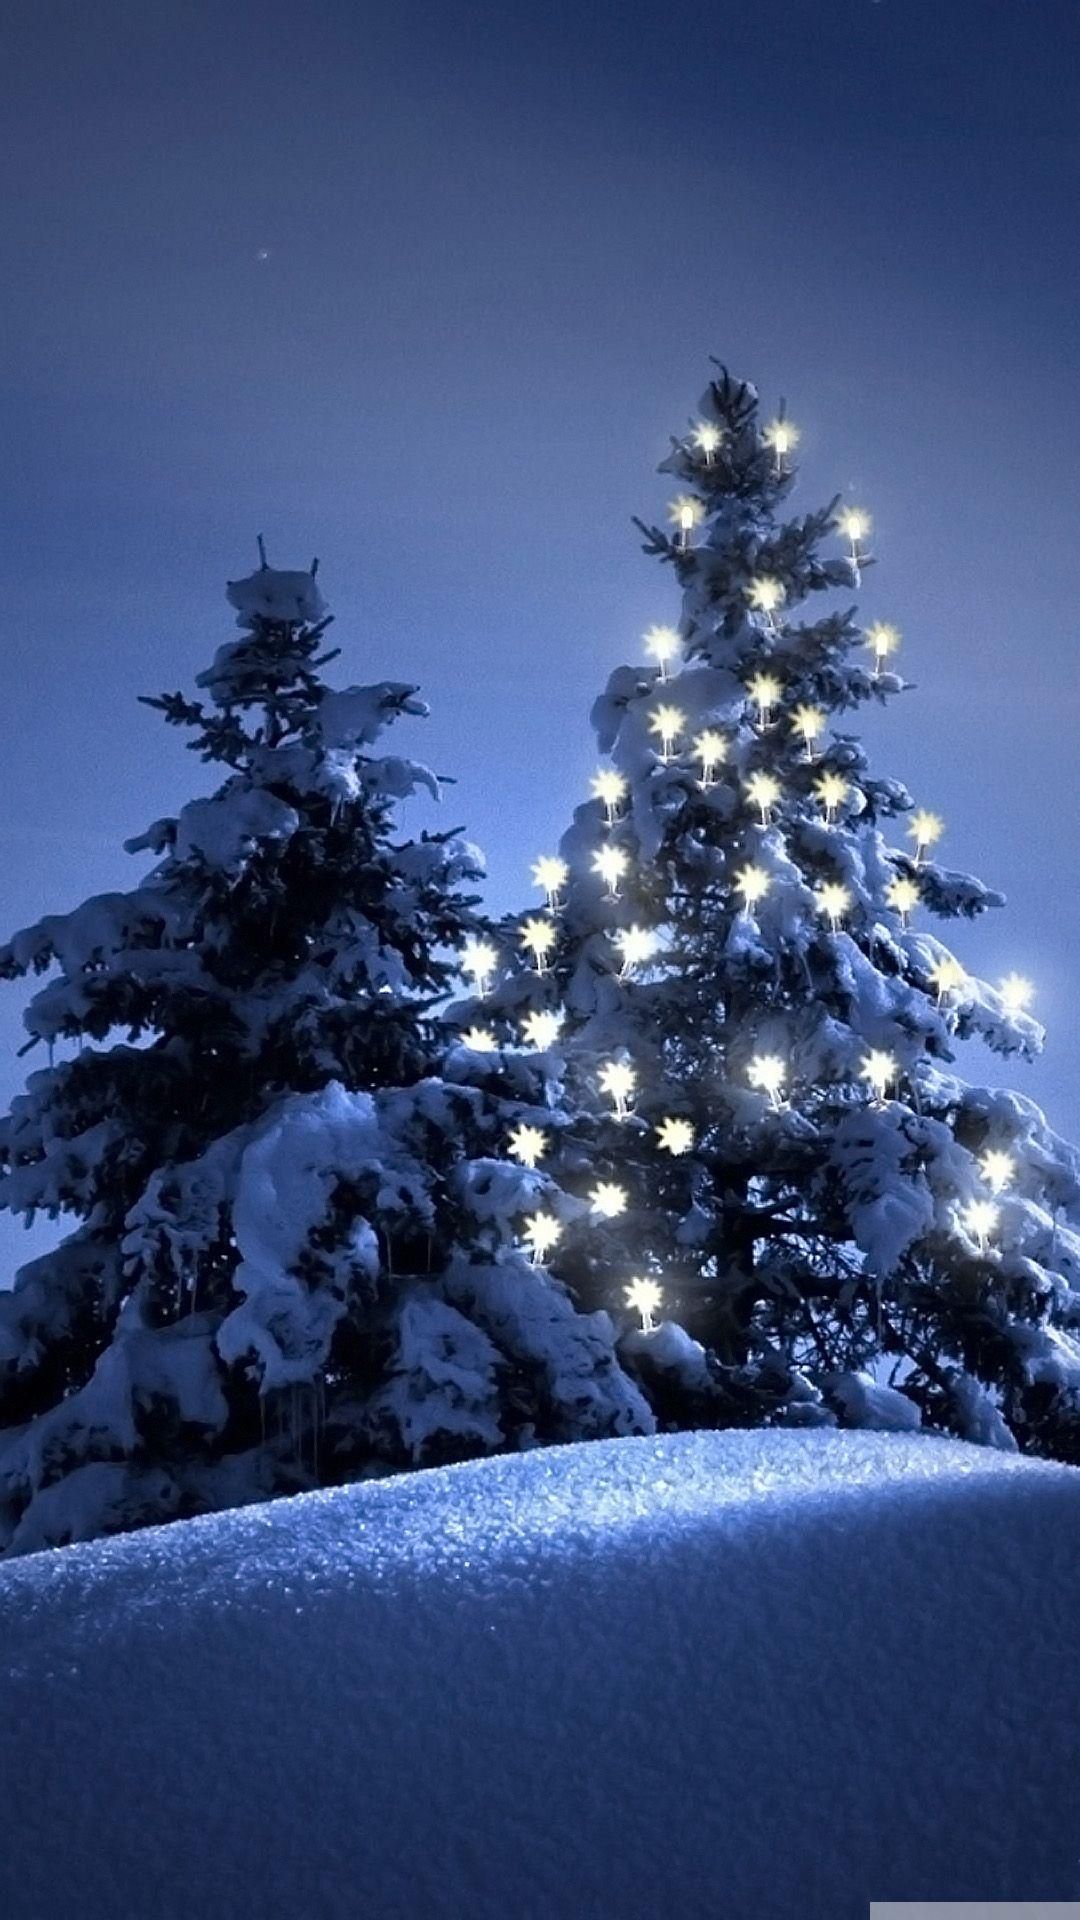 Snow Christmas Tree Winter IPhone 6 Wallpaper. Wallpaper Iphone Christmas, IPhone Wallpaper Winter, Christmas Tree Wallpaper Iphone